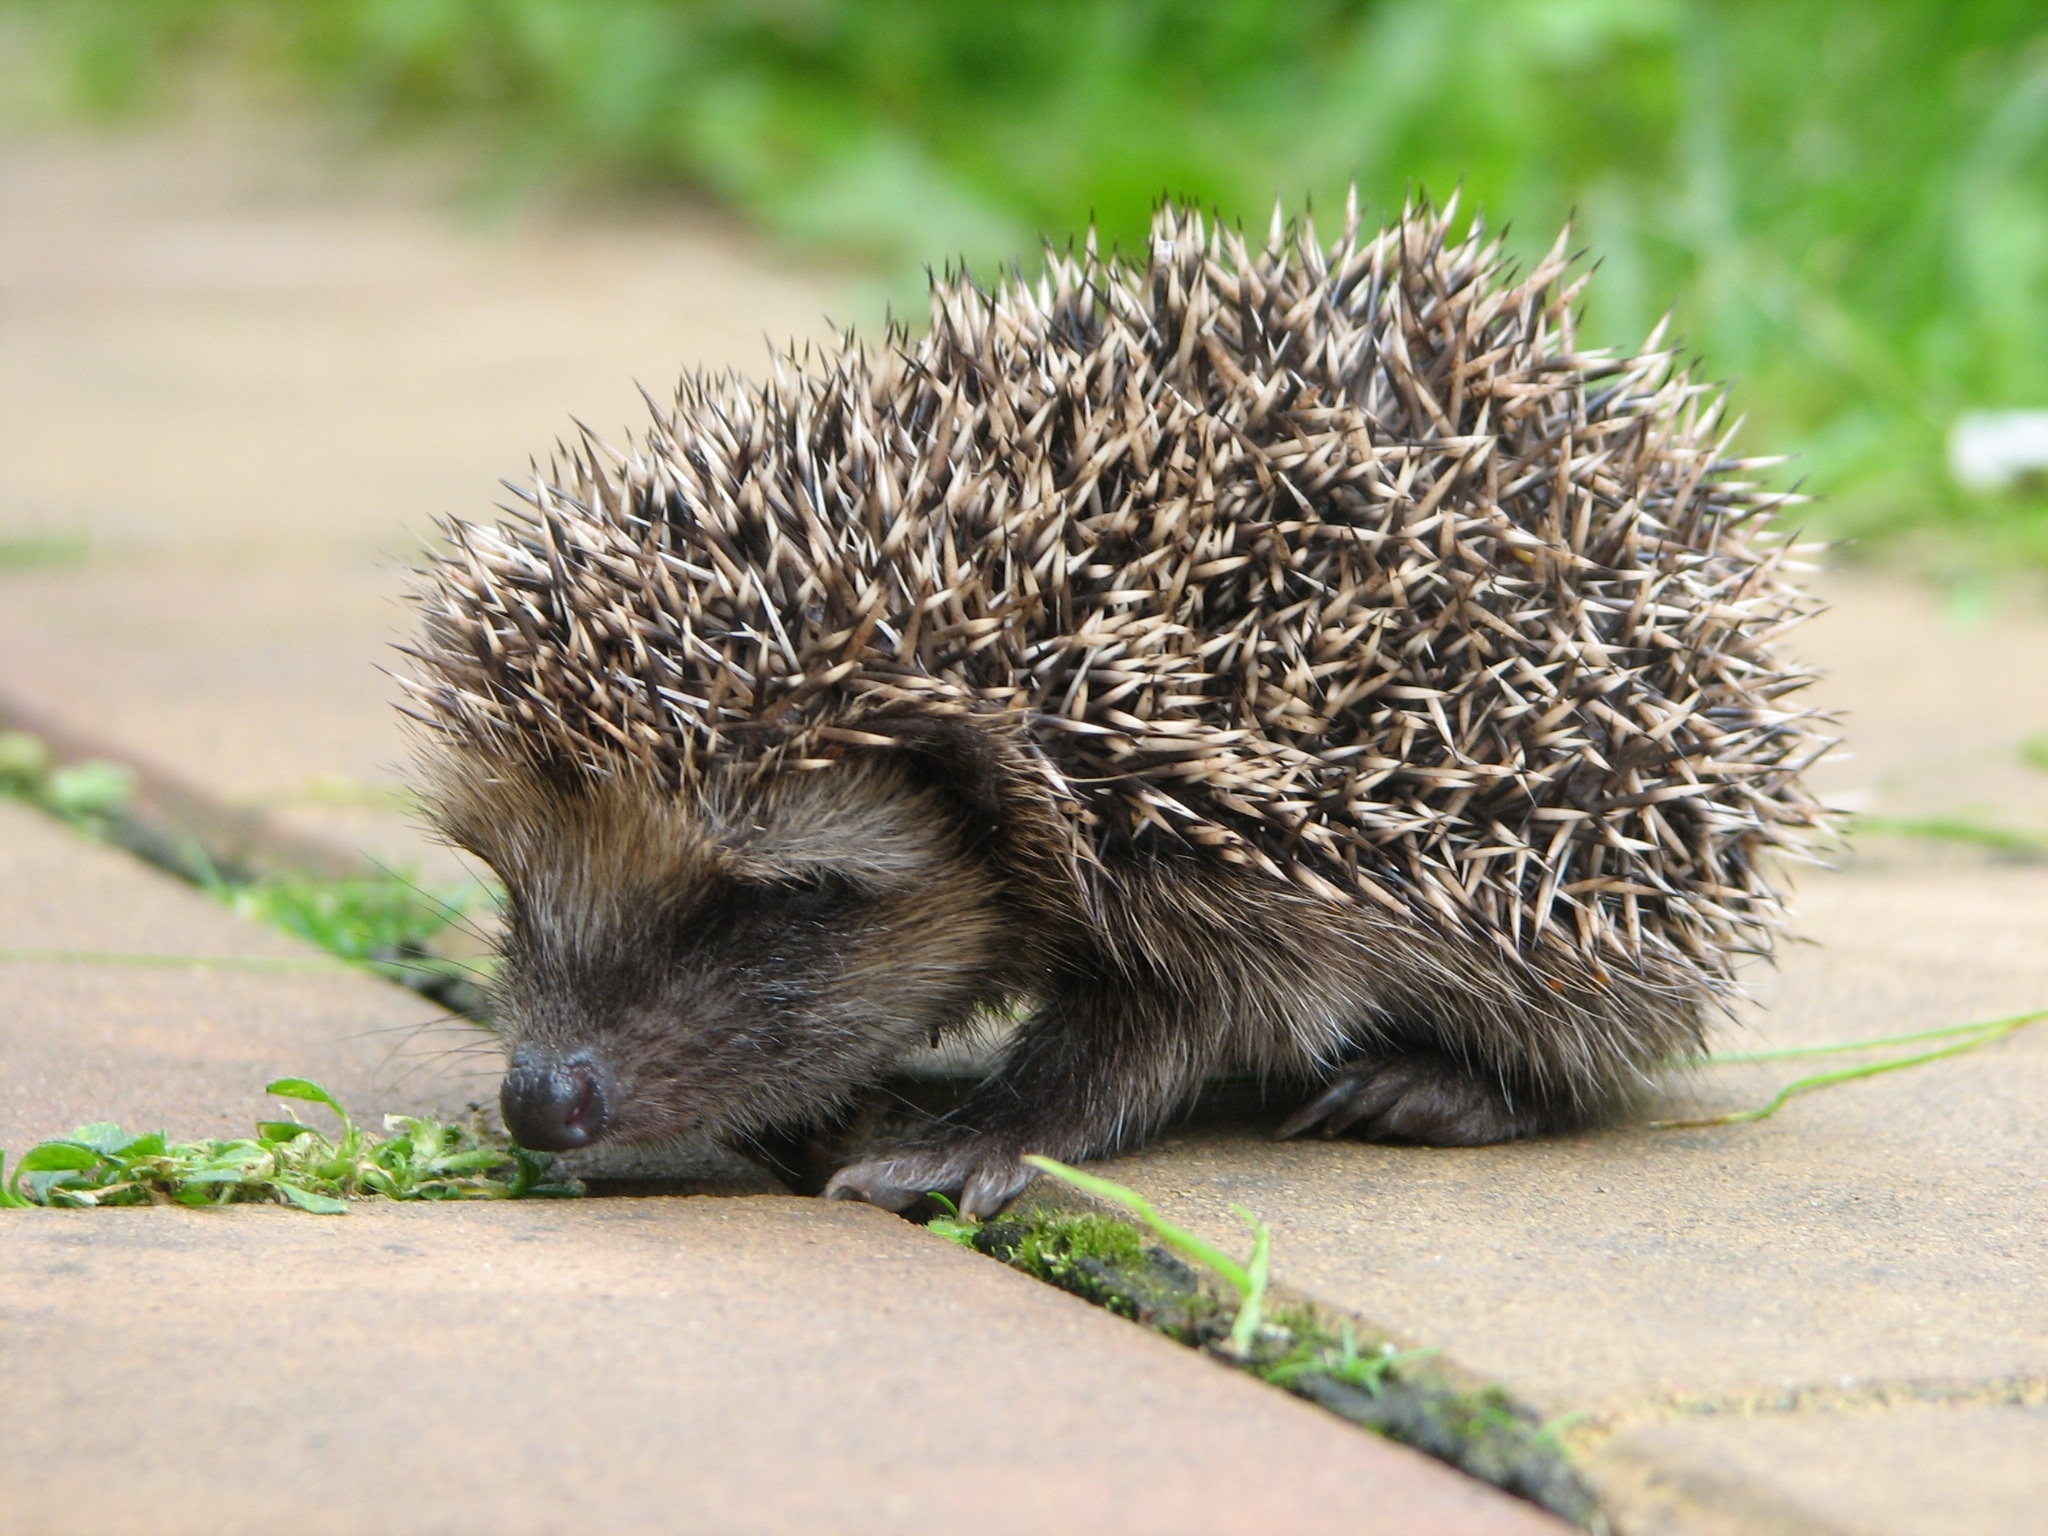 Baby hedgehog with needles.